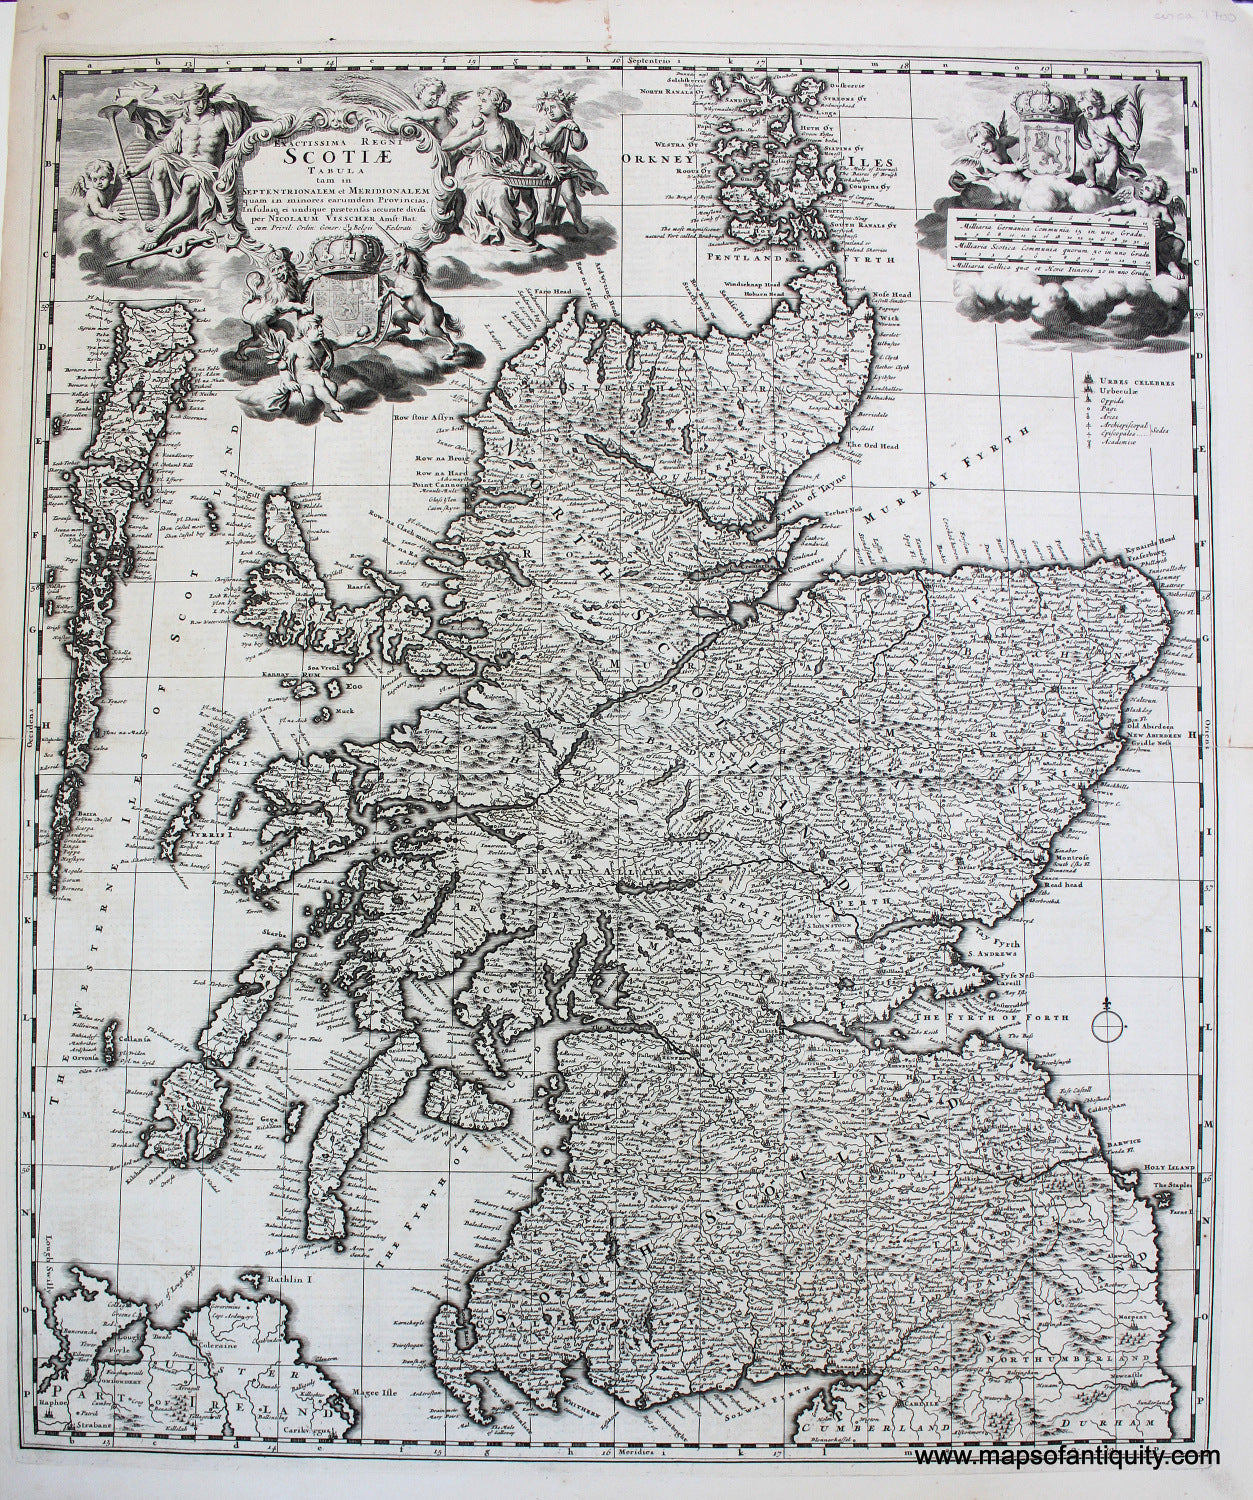 Antique-Black-and-White-Map--Exactissima-Regni-Scotiae---Scotland-Visscher-Map-**********-Europe-Great-Britain-c.-1700-Visscher--Maps-Of-Antiquity